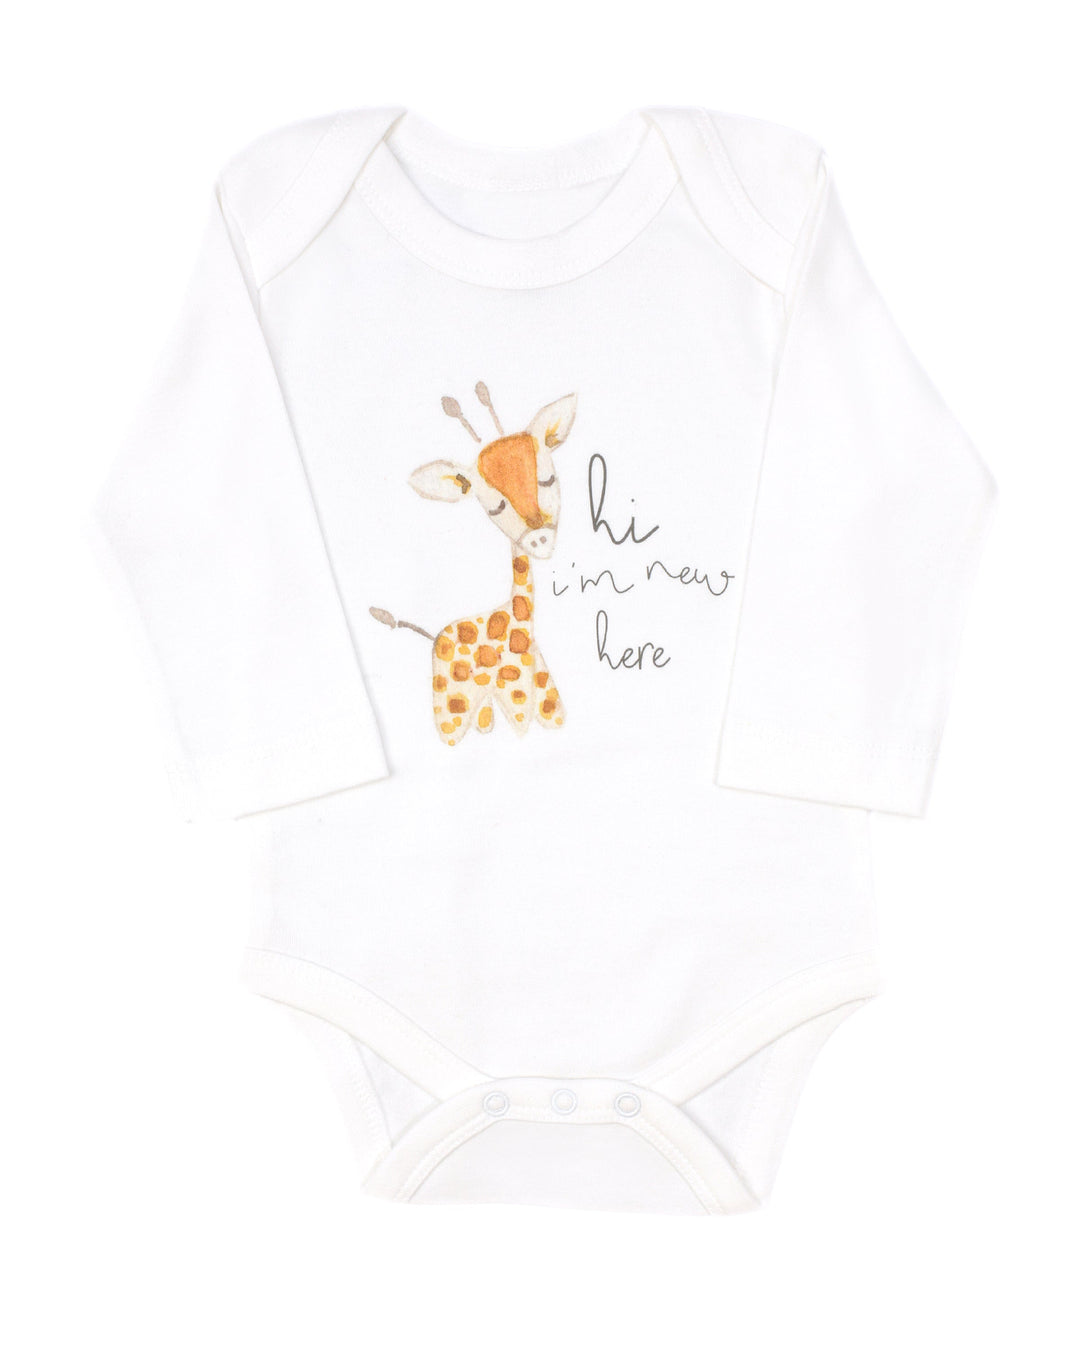 Charley the Giraffe | Organic Baby Girl Gift Basket